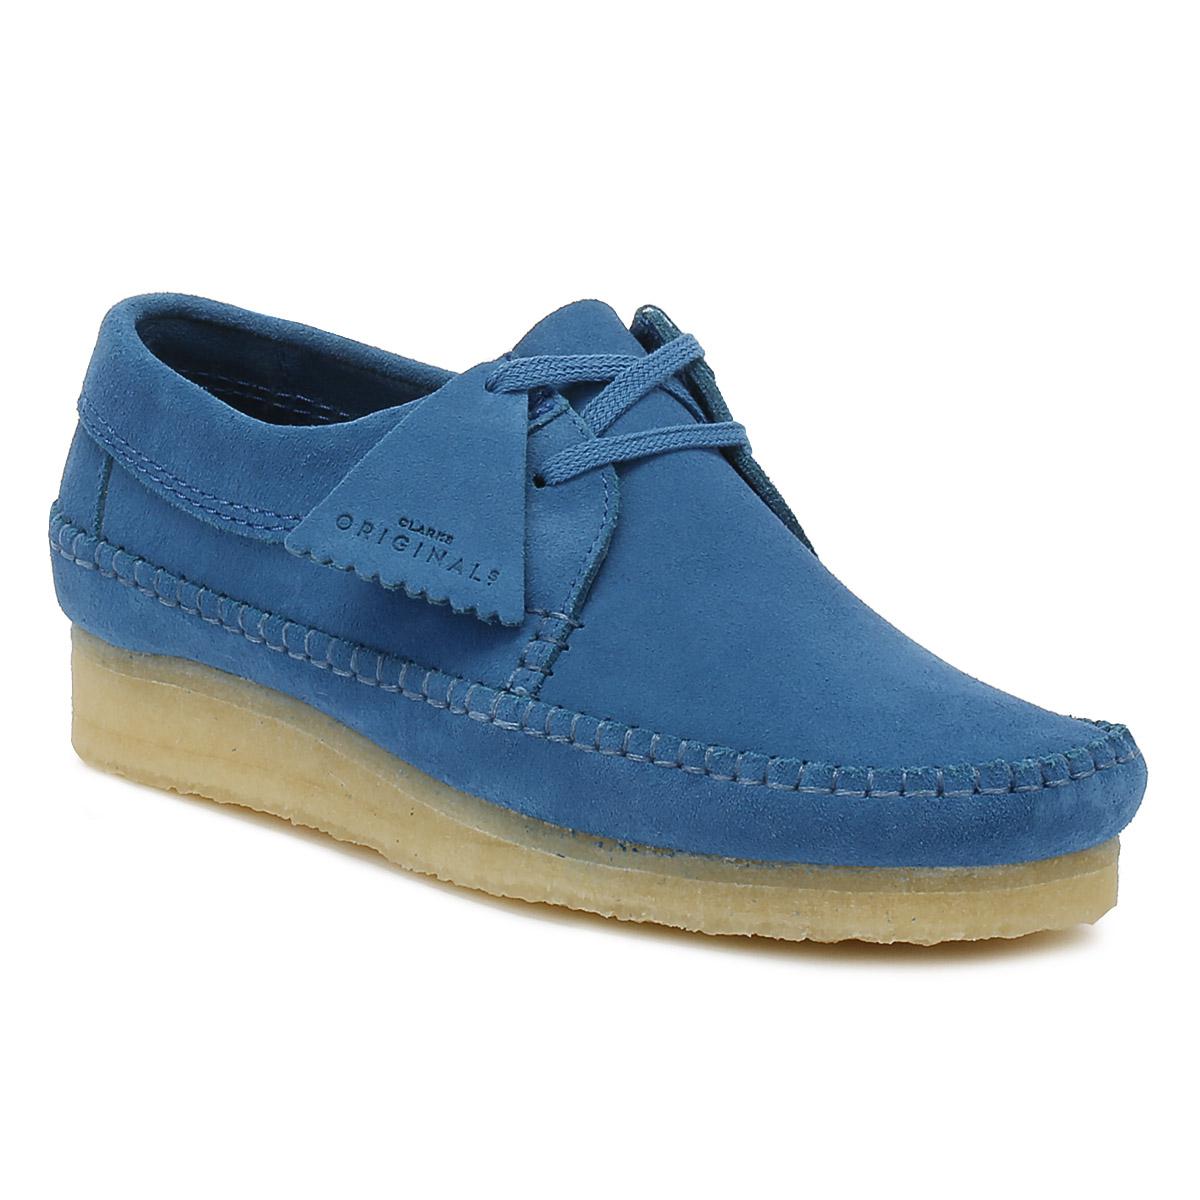 Clarks Originals Mens Ocean Blue Weaver Suede Shoes for Men - Lyst